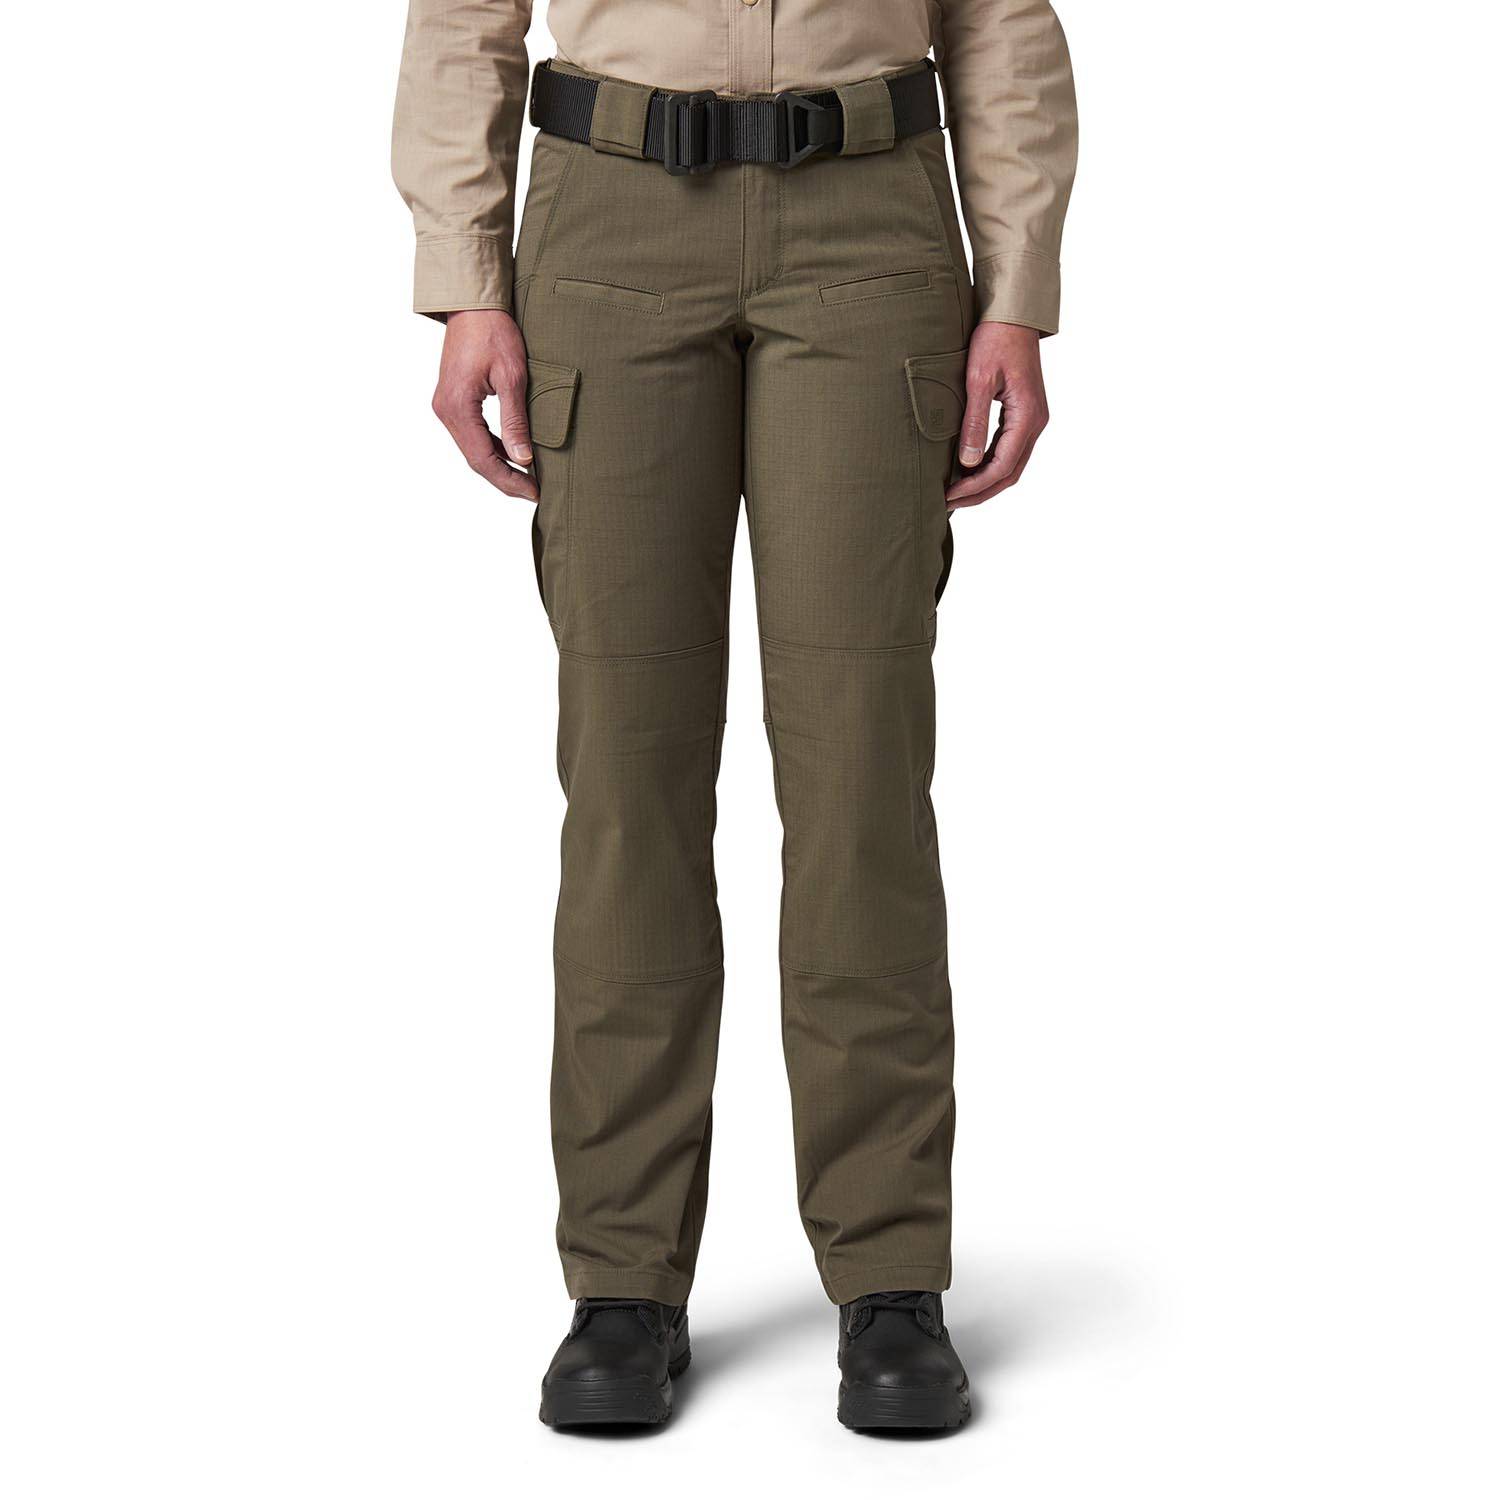 5.11 Tactical Women's Stryke Pants